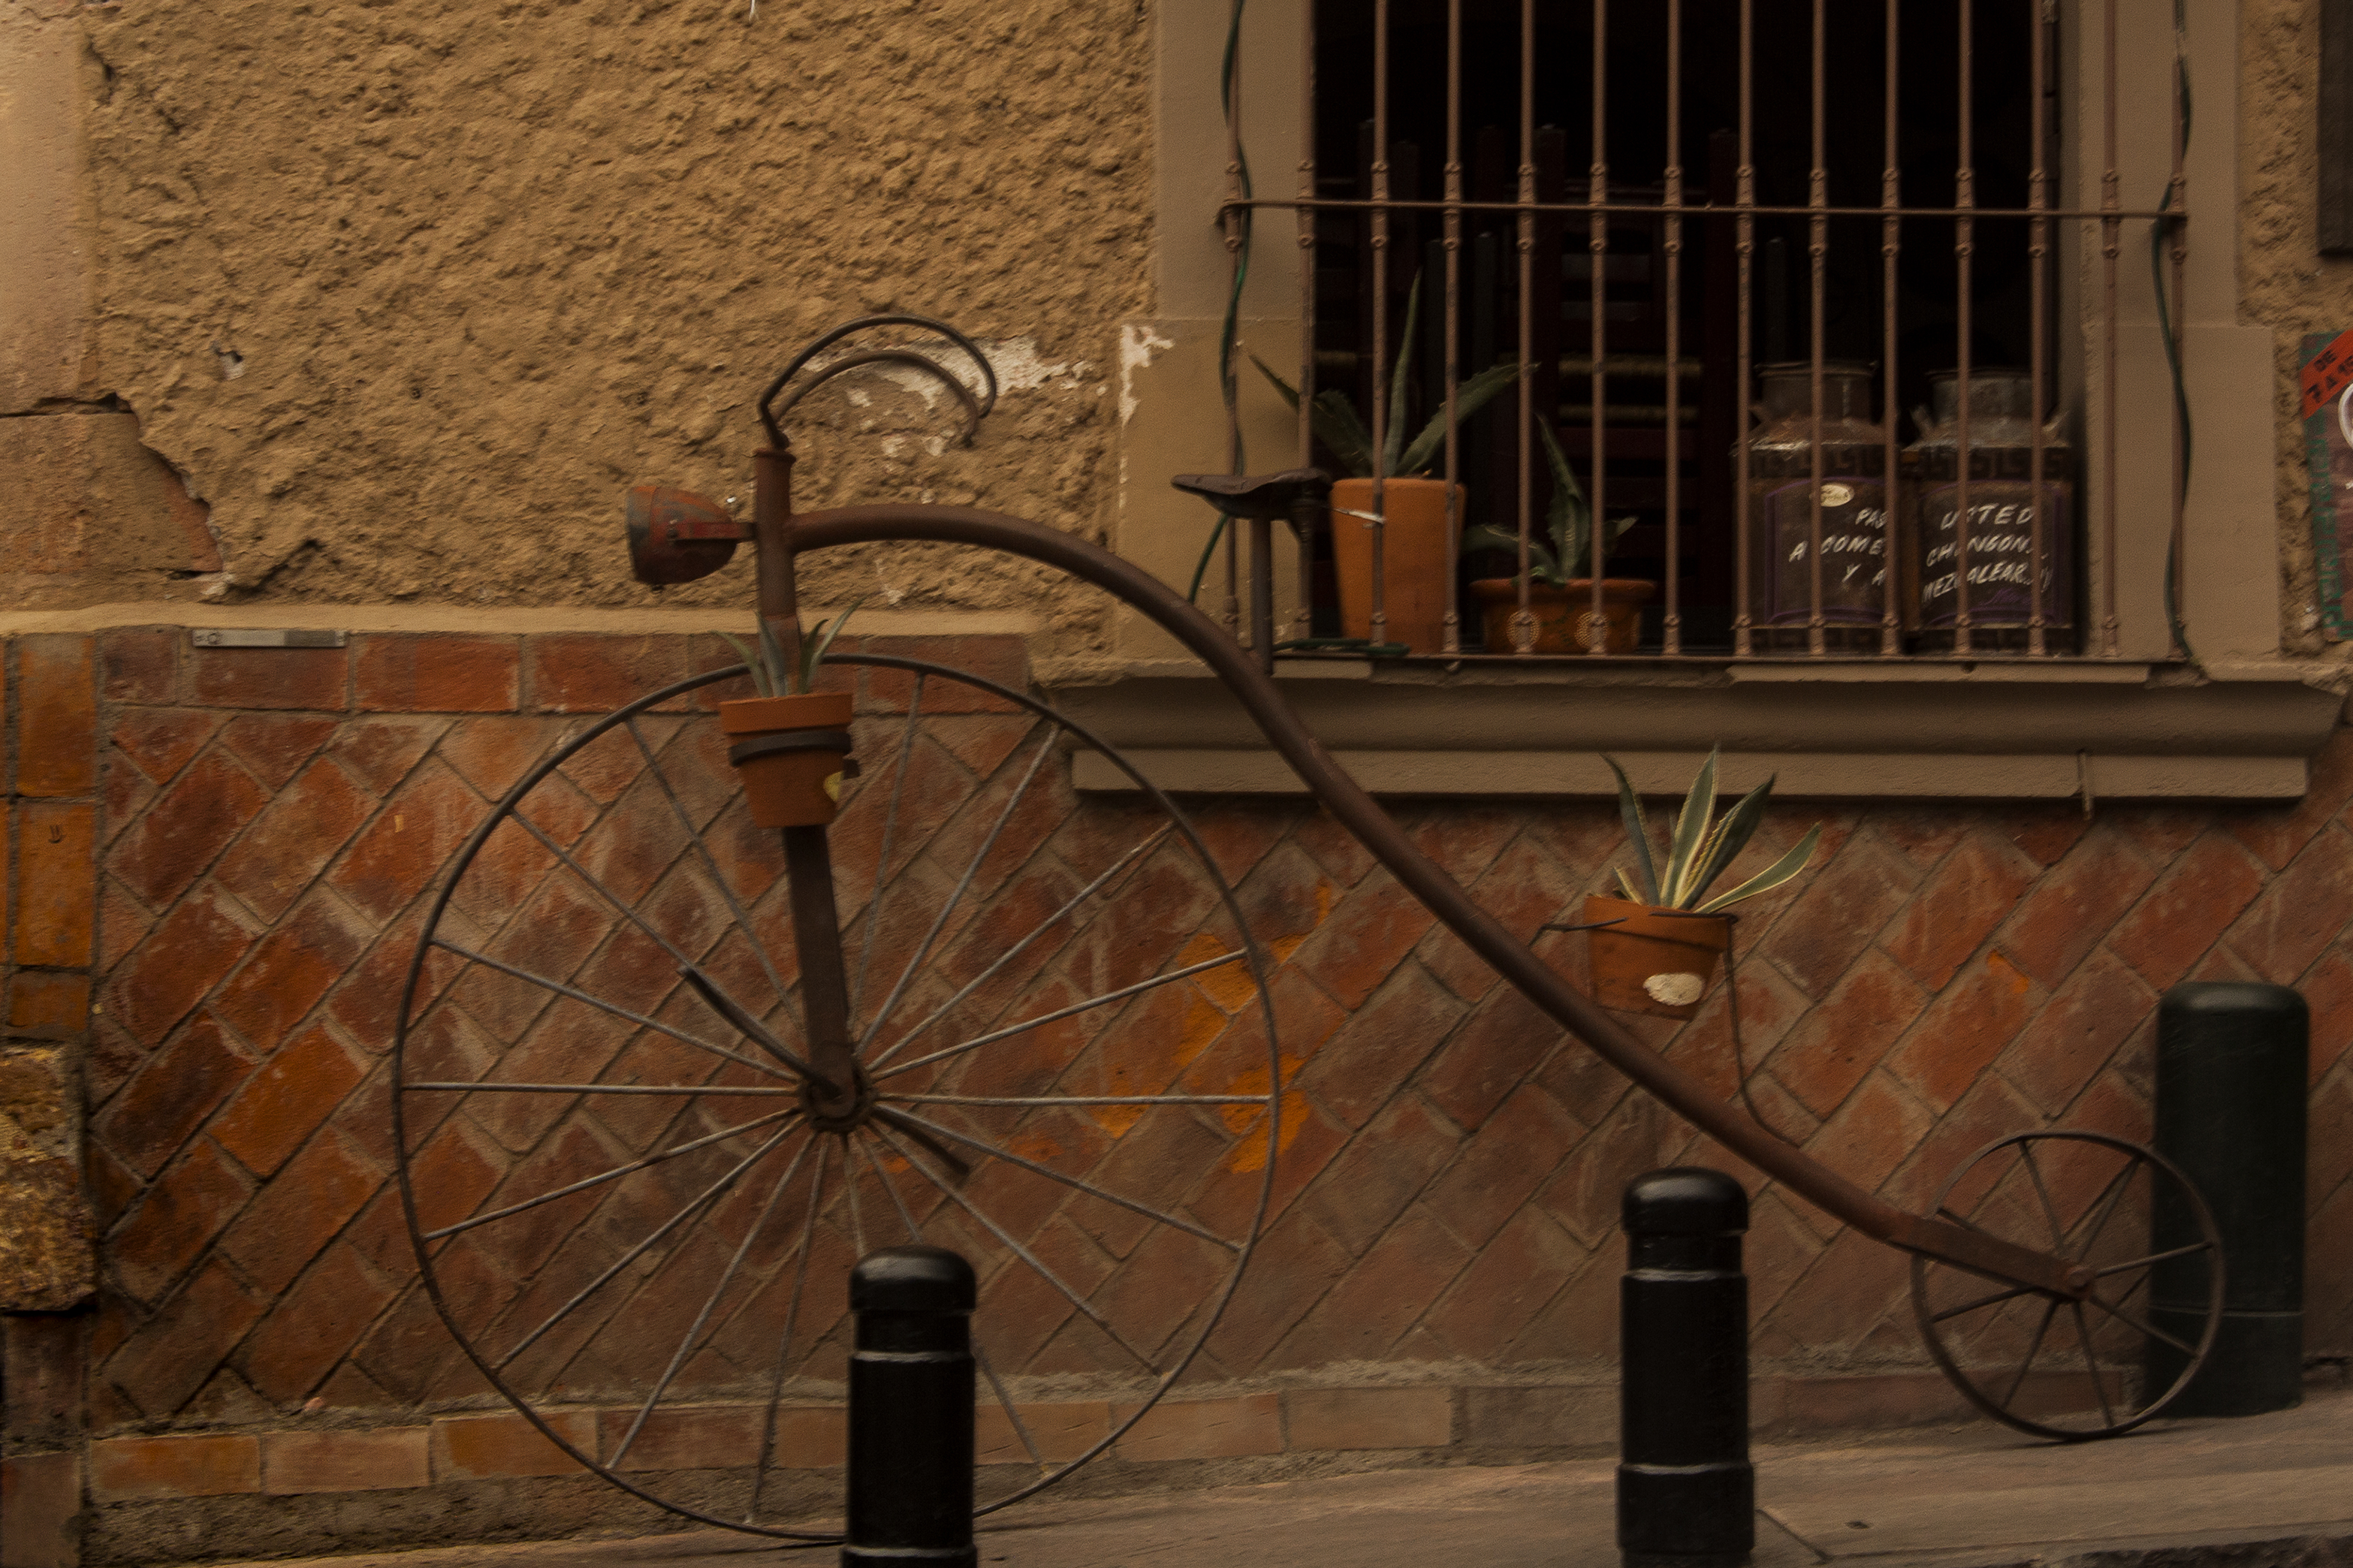 La bicicleta dee la María Querétaro, Querétaro, México